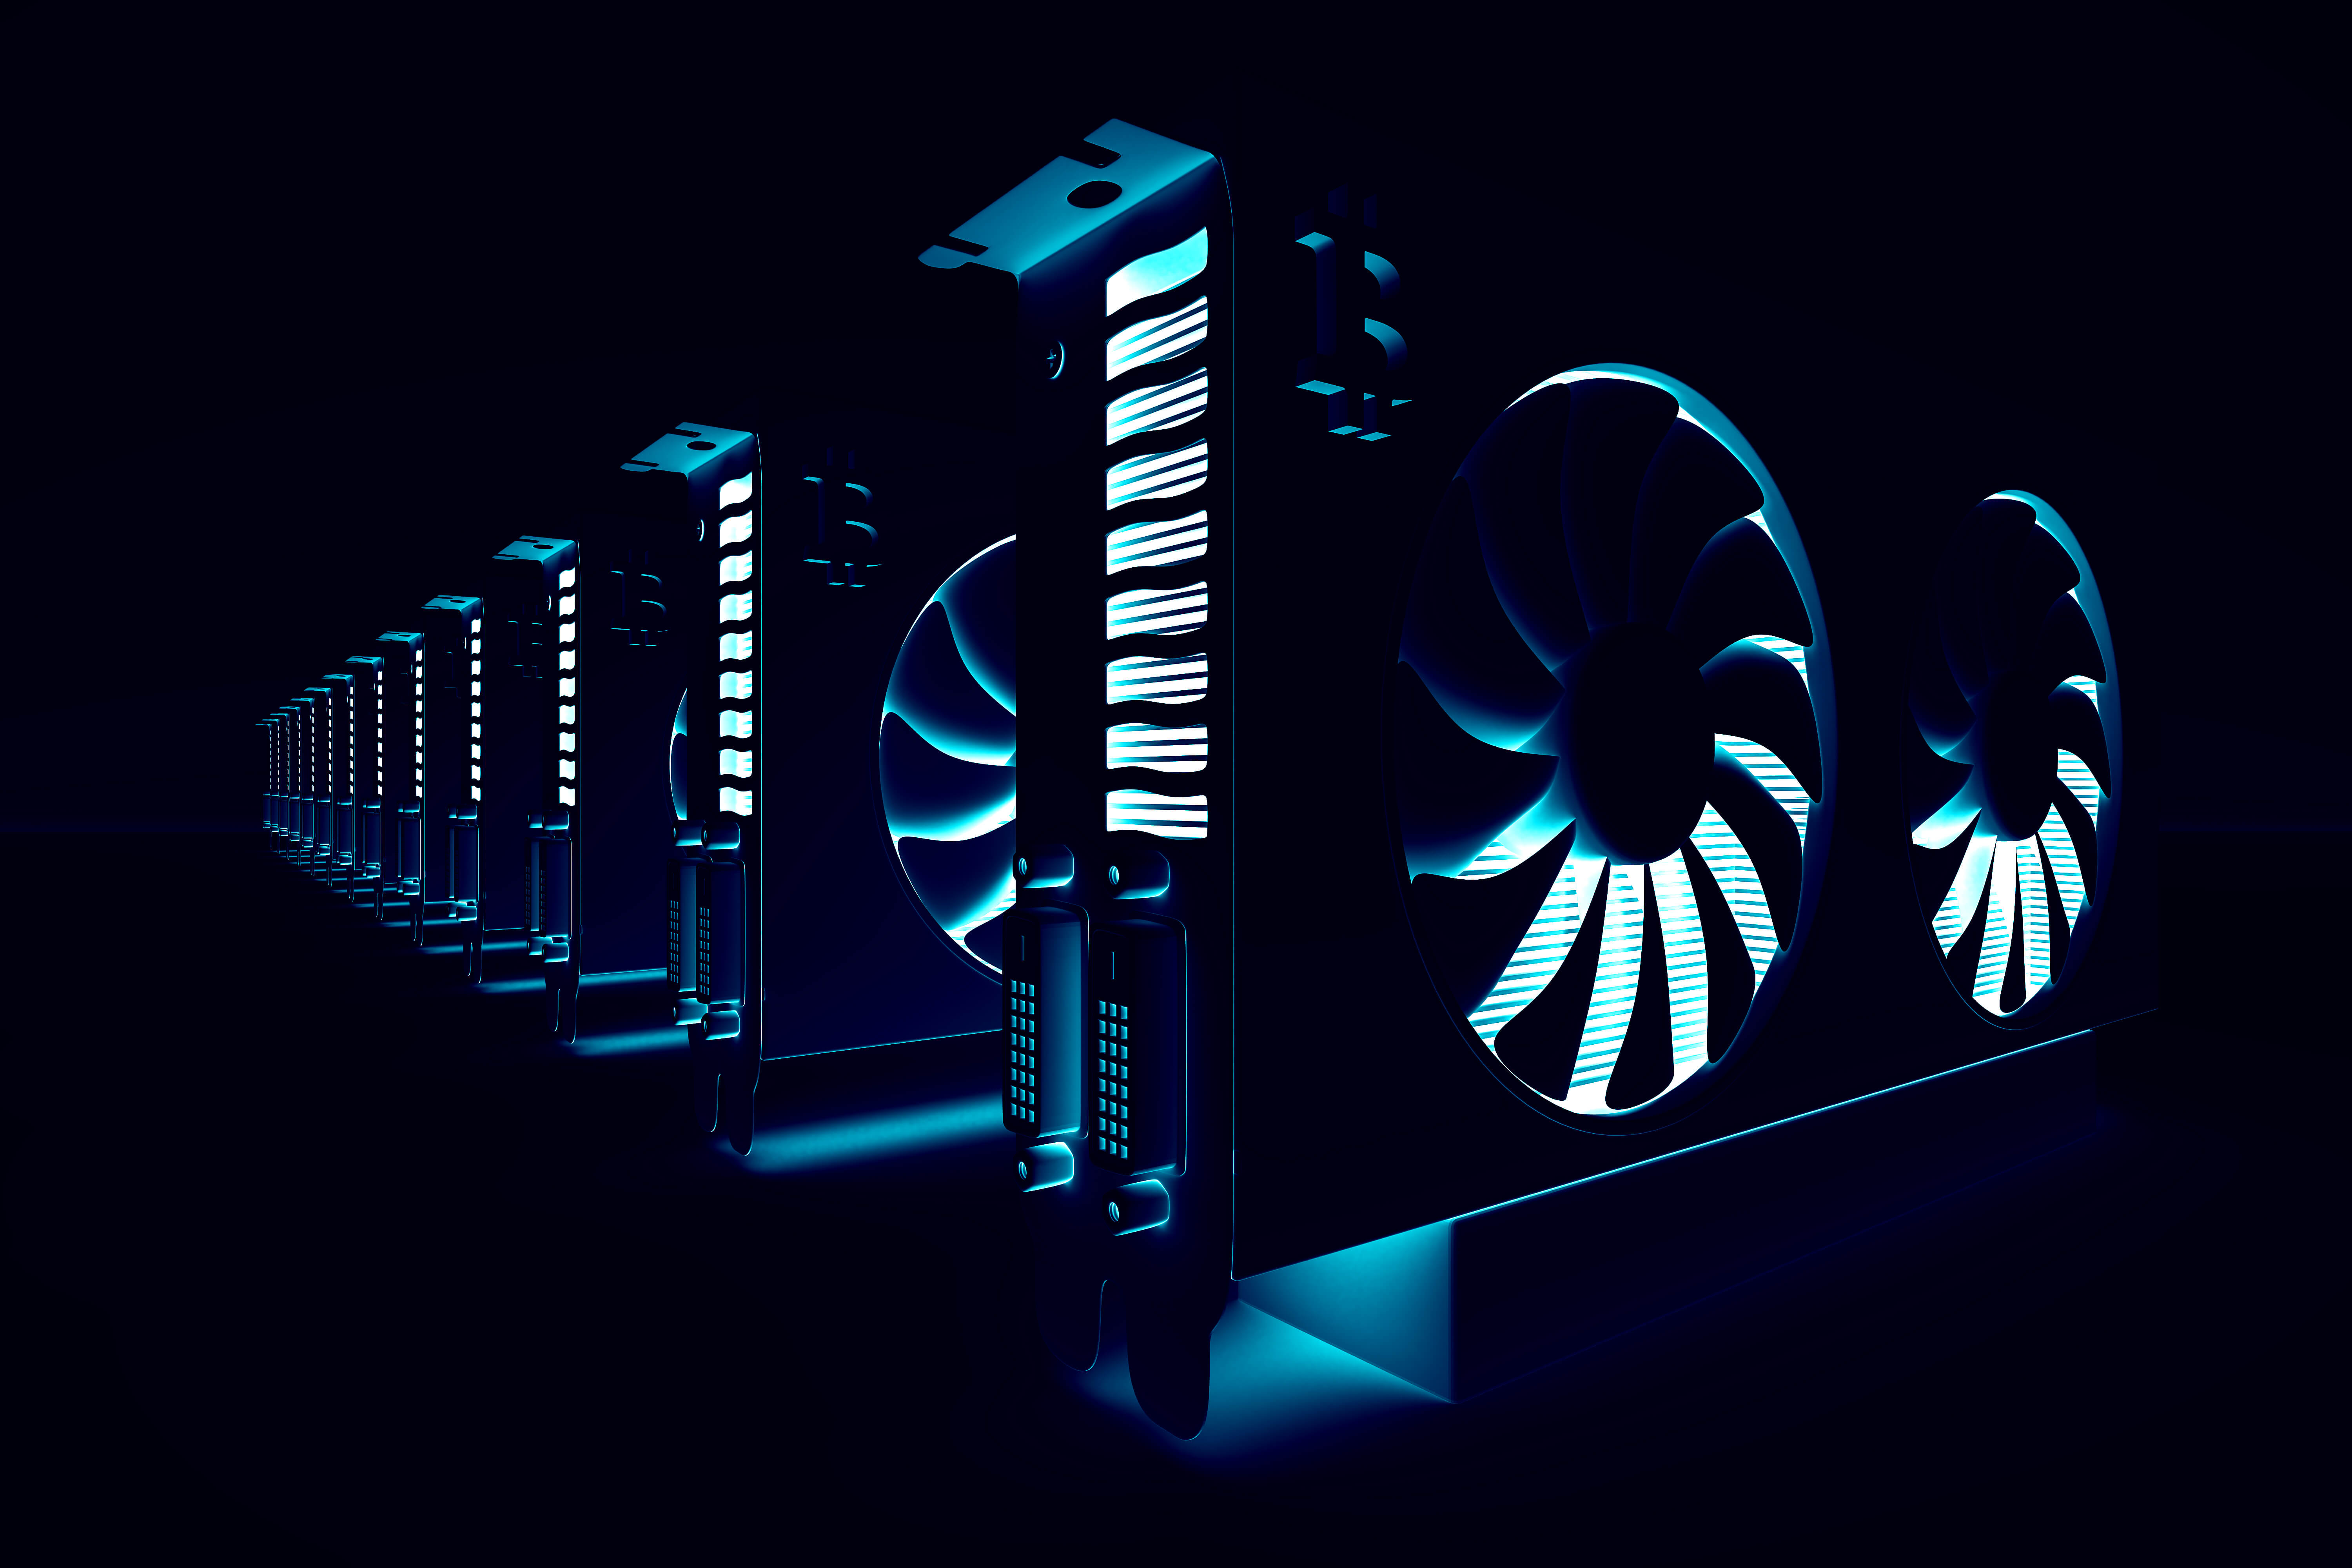 3D illustration of GPU 'rig'